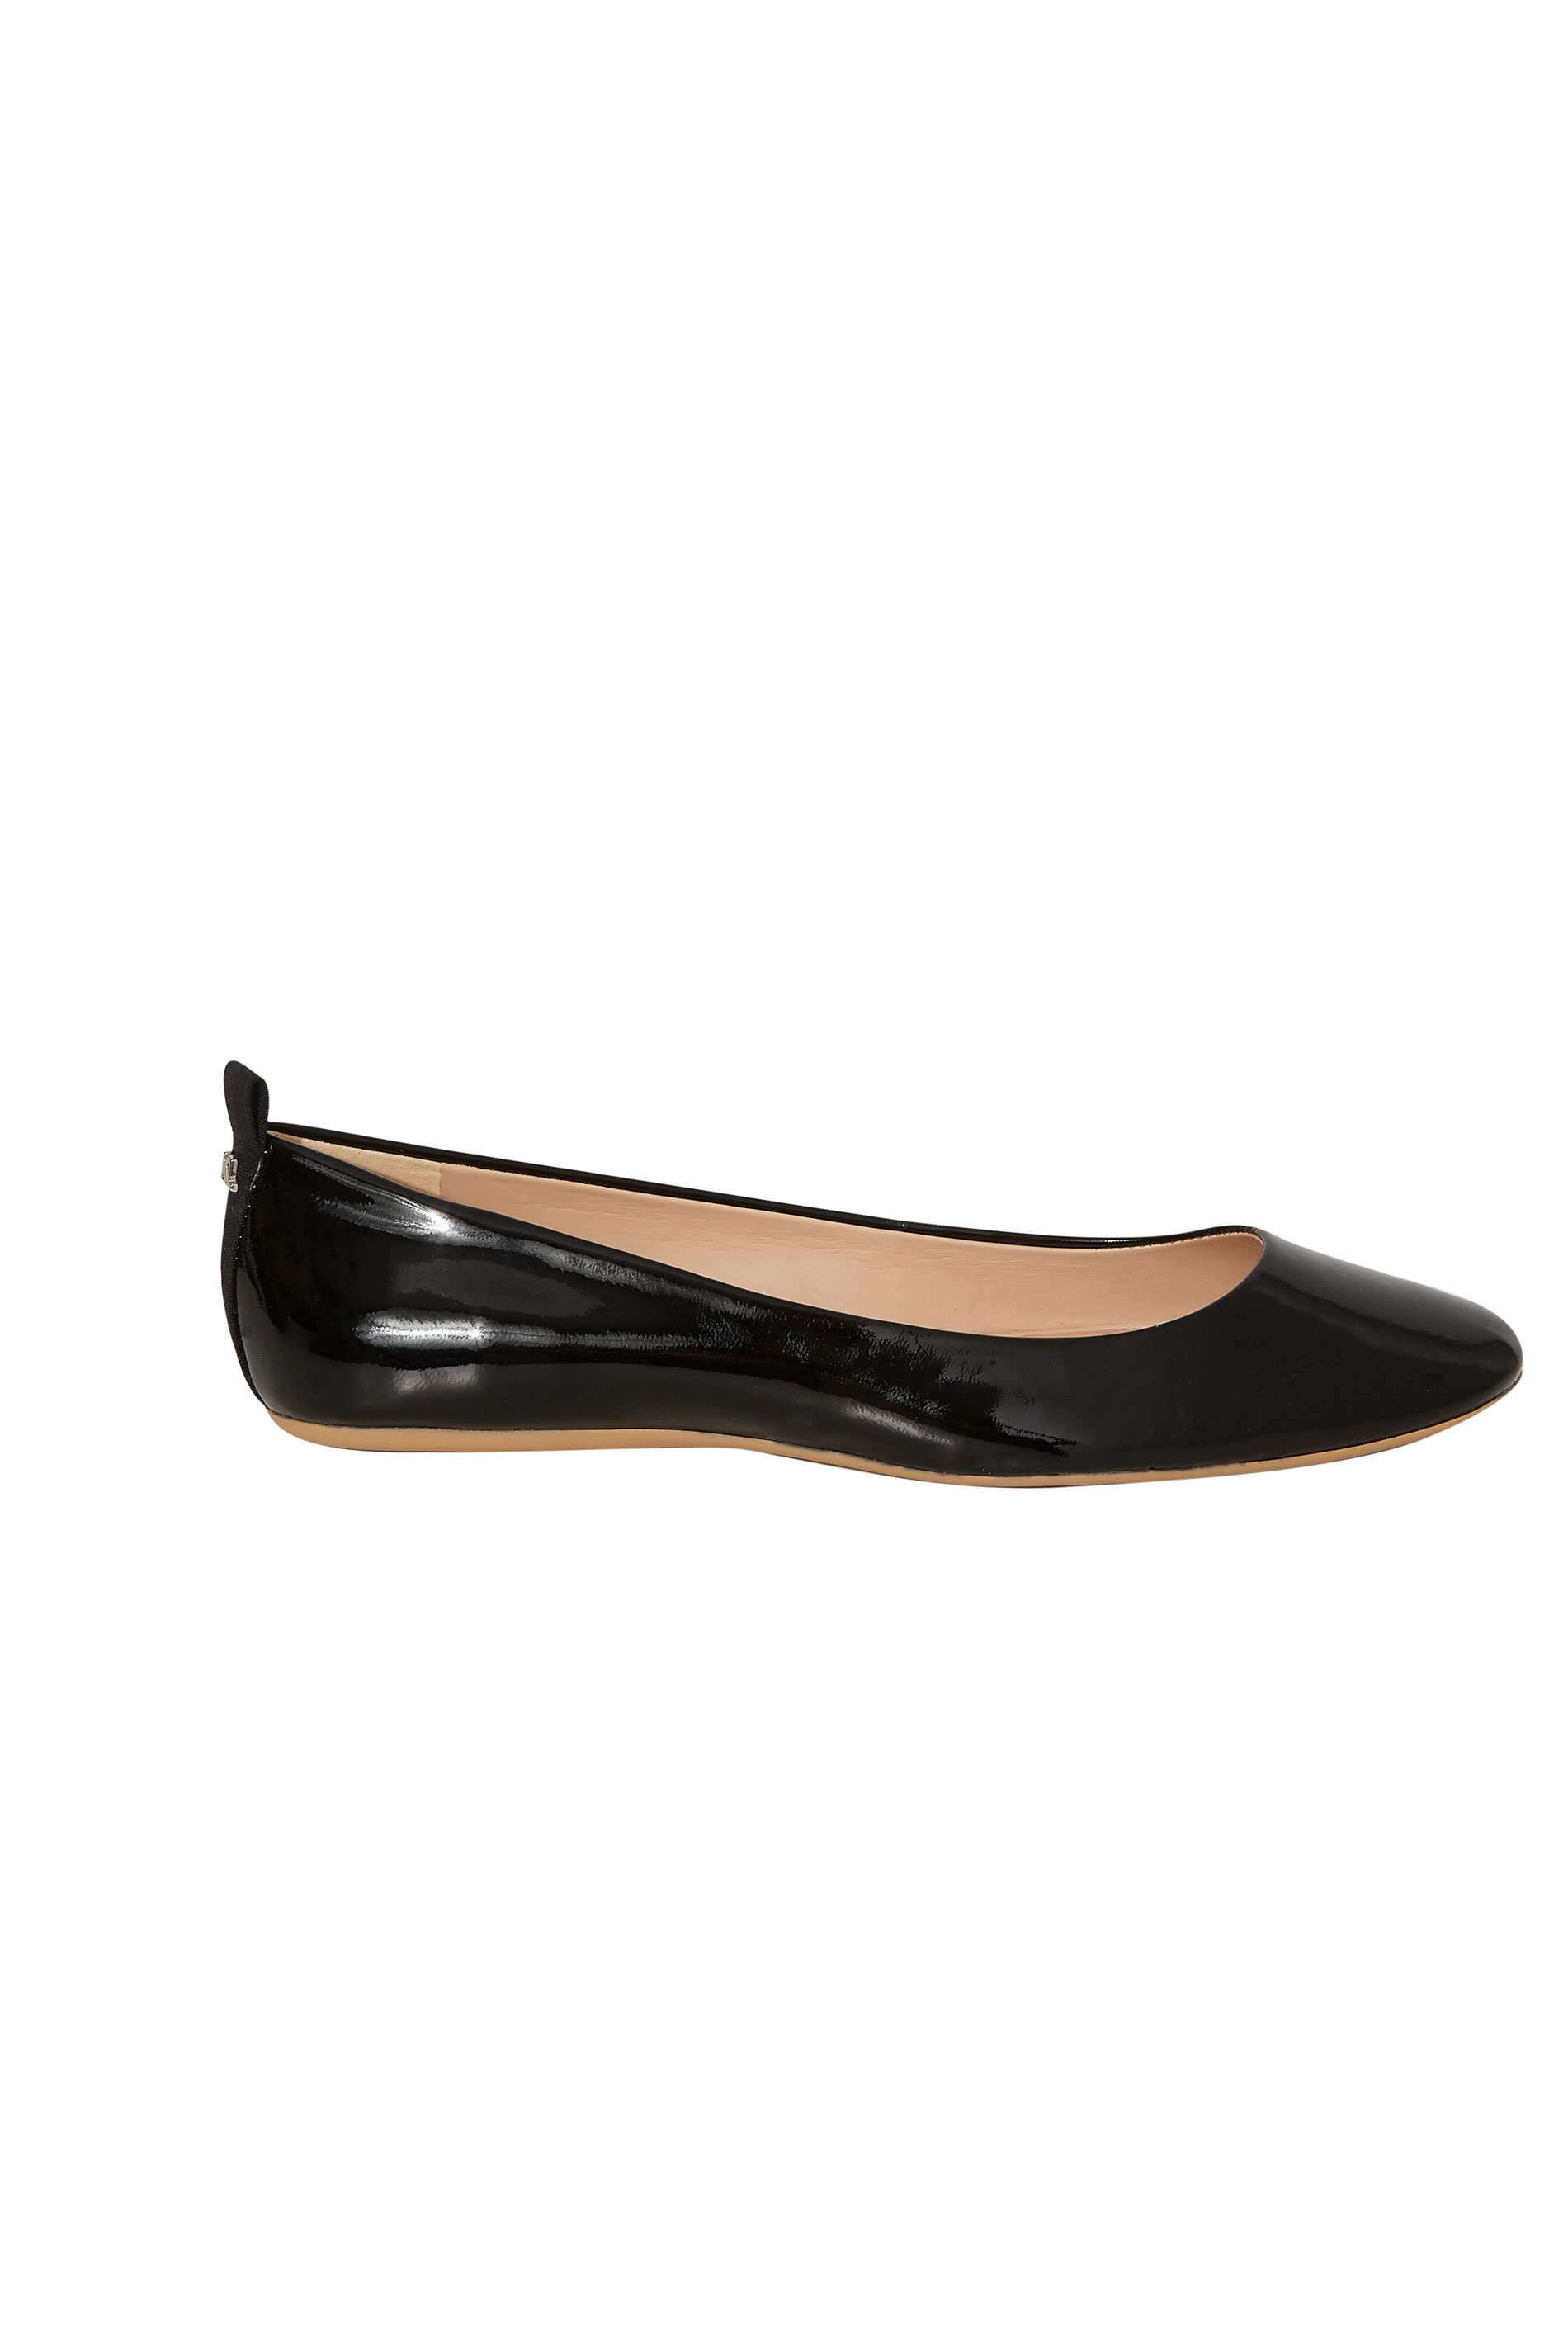 KARL LAGERFELD Paris Black Vada Ballerina Flat Shoes | Long Tall Sally